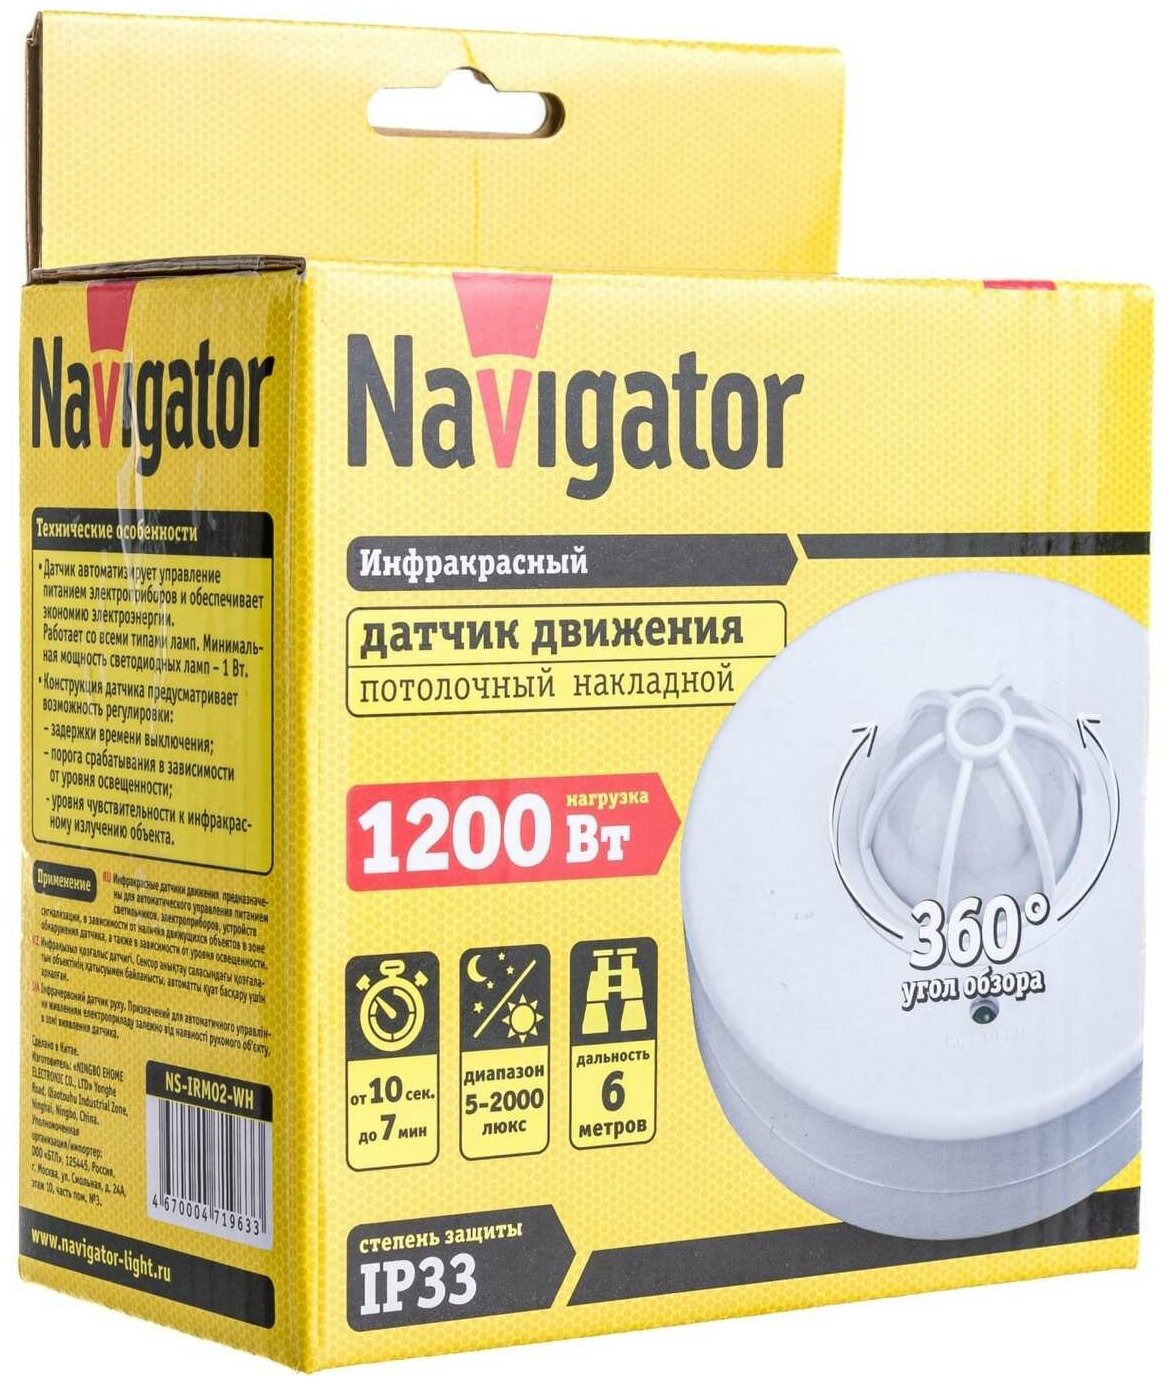 Датчик Navigator 71 963 NS-IRM02-WH Датчик движения ИК цена за 1 шт.